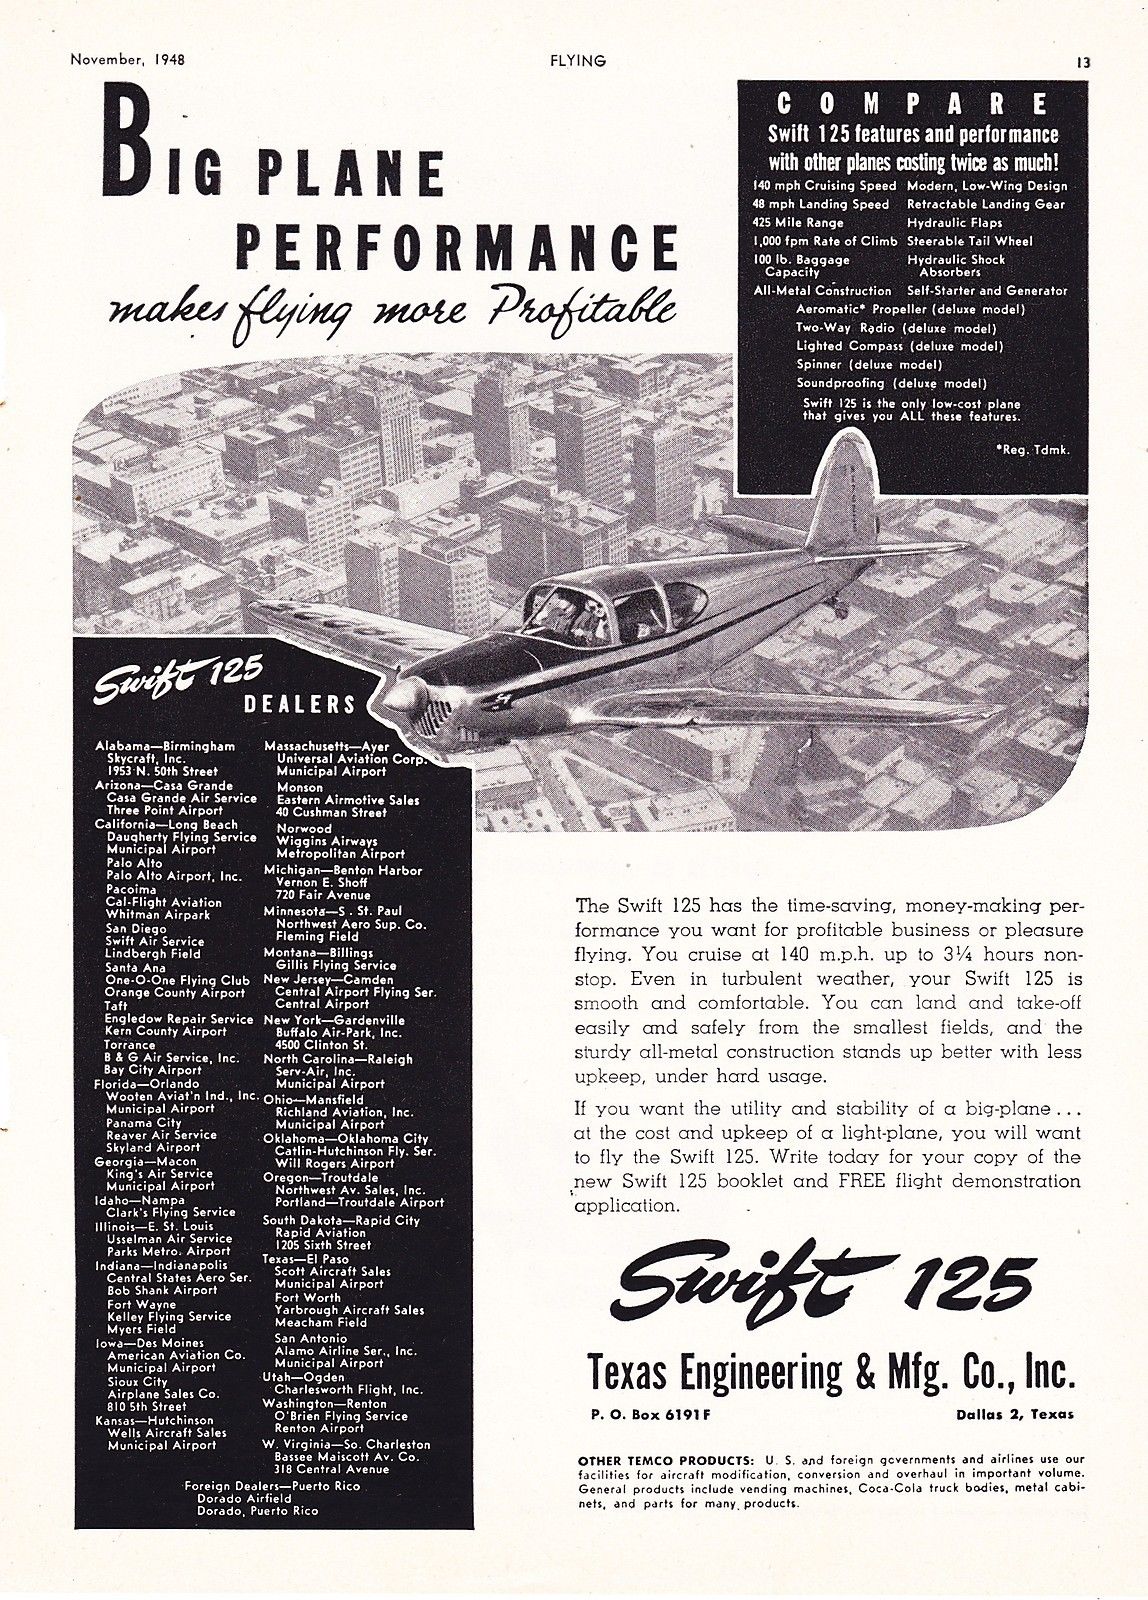 1948-Tenco-Swift-125-Aircraft-ad-9-26-16b1.jpg